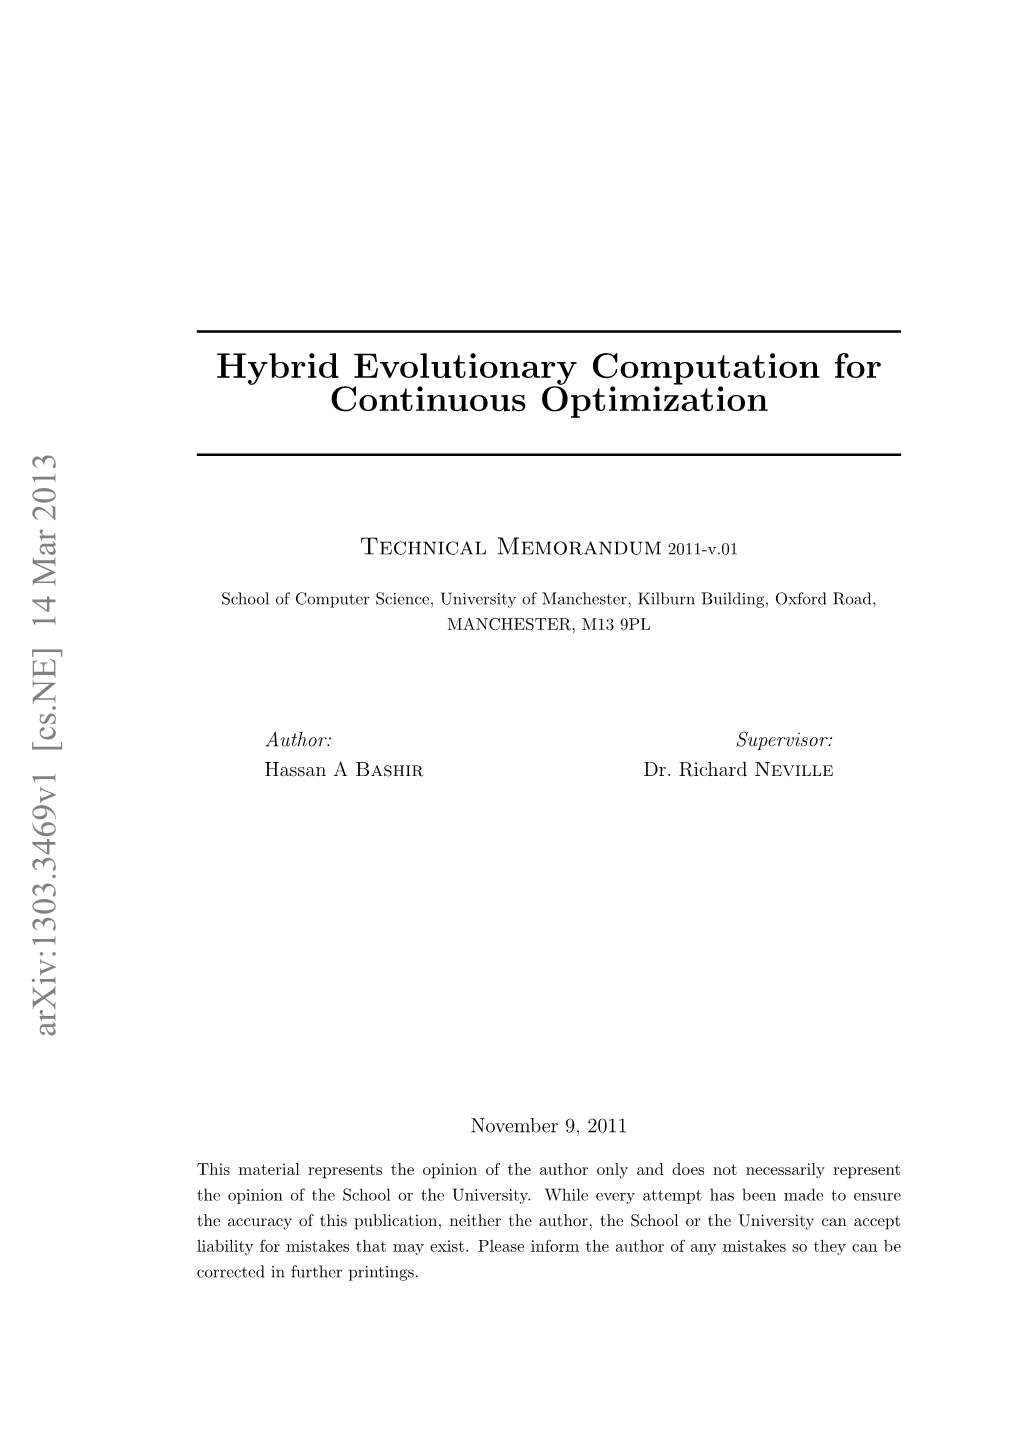 Hybrid Evolutionary Computation for Continuous Optimization Arxiv